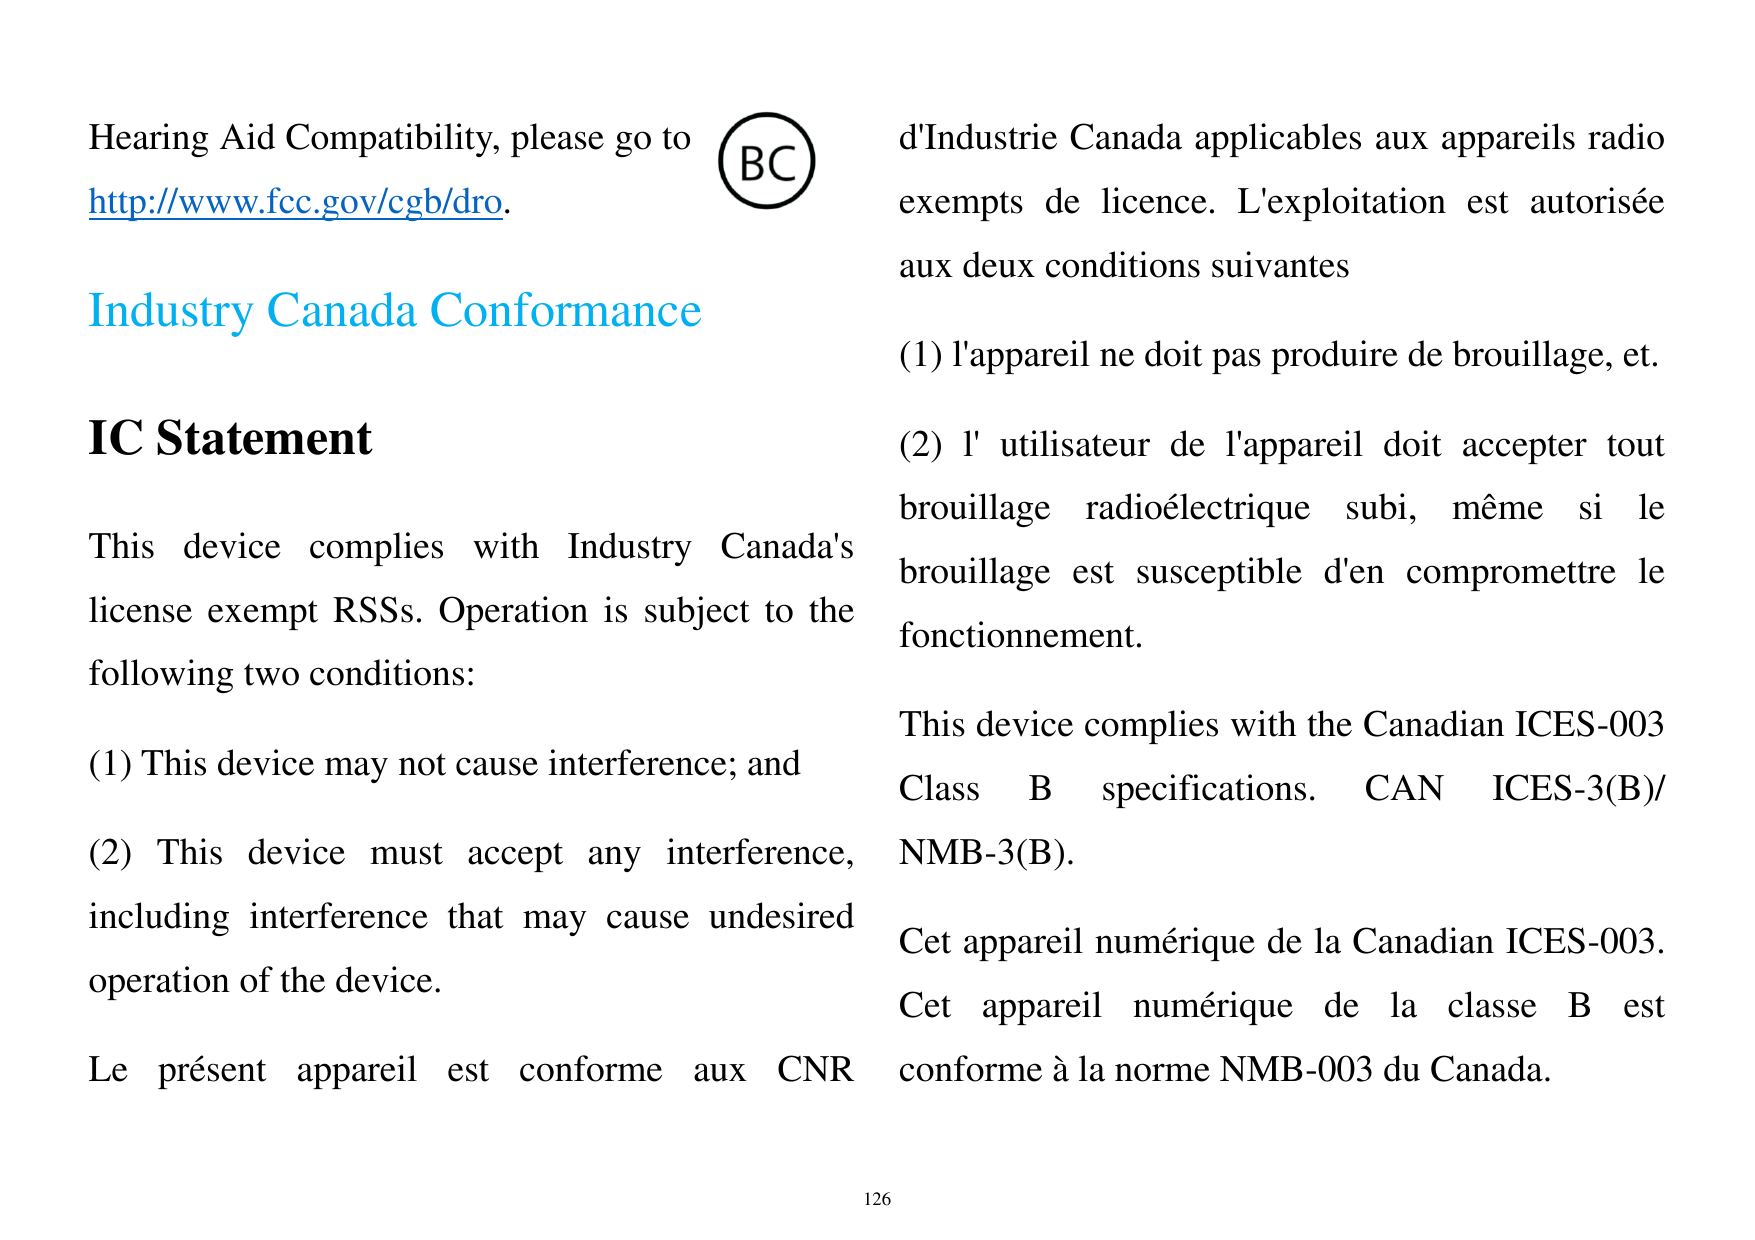 Hearing Aid Compatibility, please go tod'Industrie Canada applicables aux appareils radiohttp://www.fcc.gov/cgb/dro.exempts de l